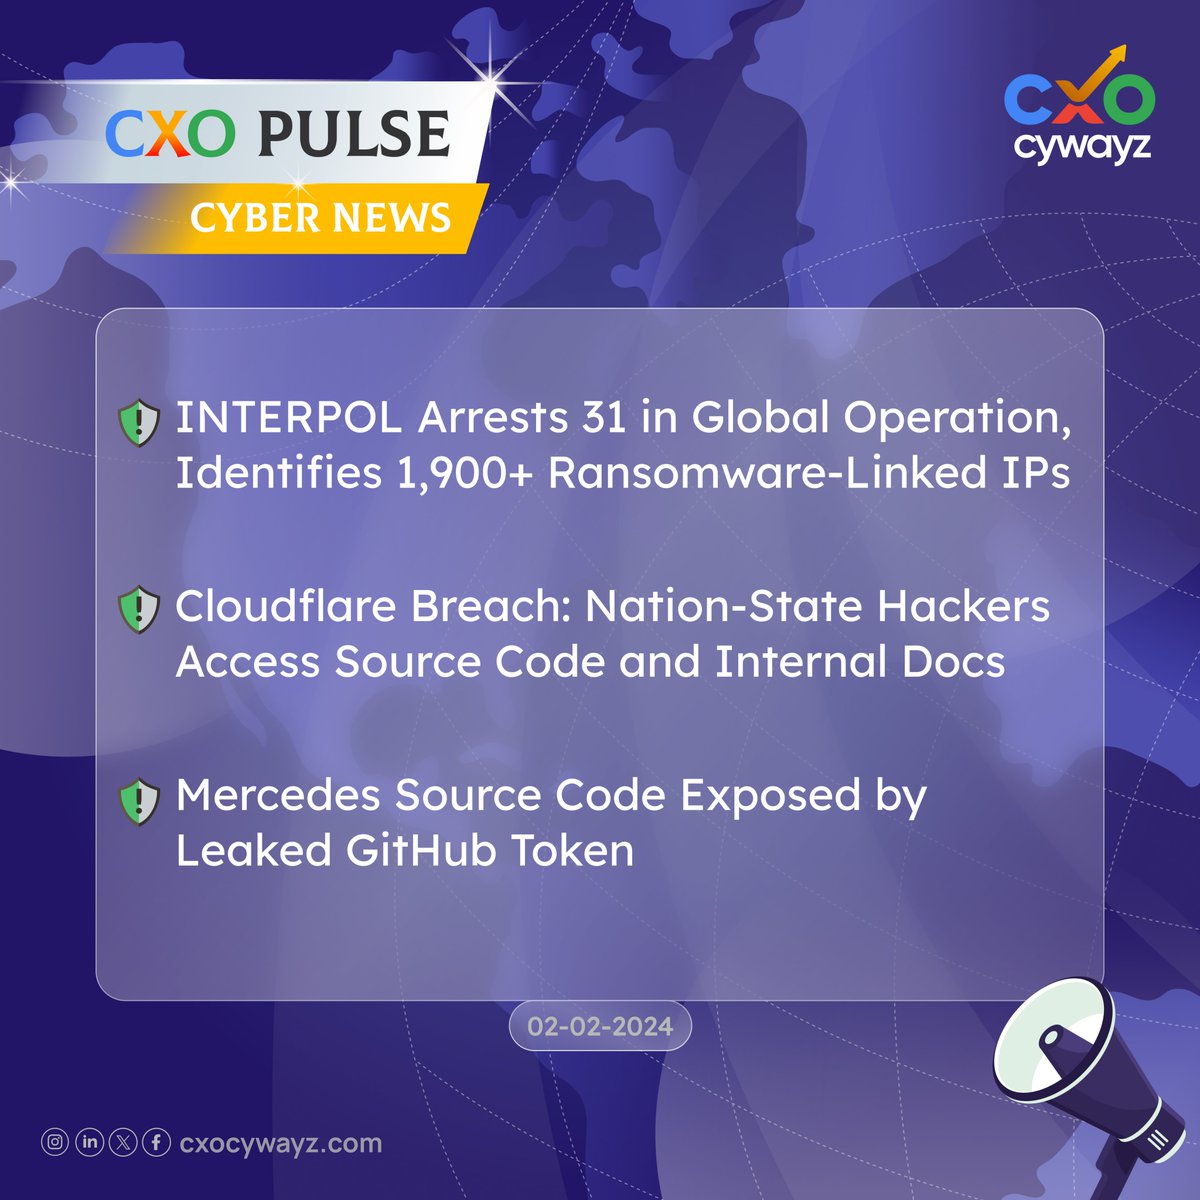 CXO PULSE Cyber News Headlines🚨

#cxocywayz #cxopulse #interpol #cloudflare #merchandise #cybersecurity #breach